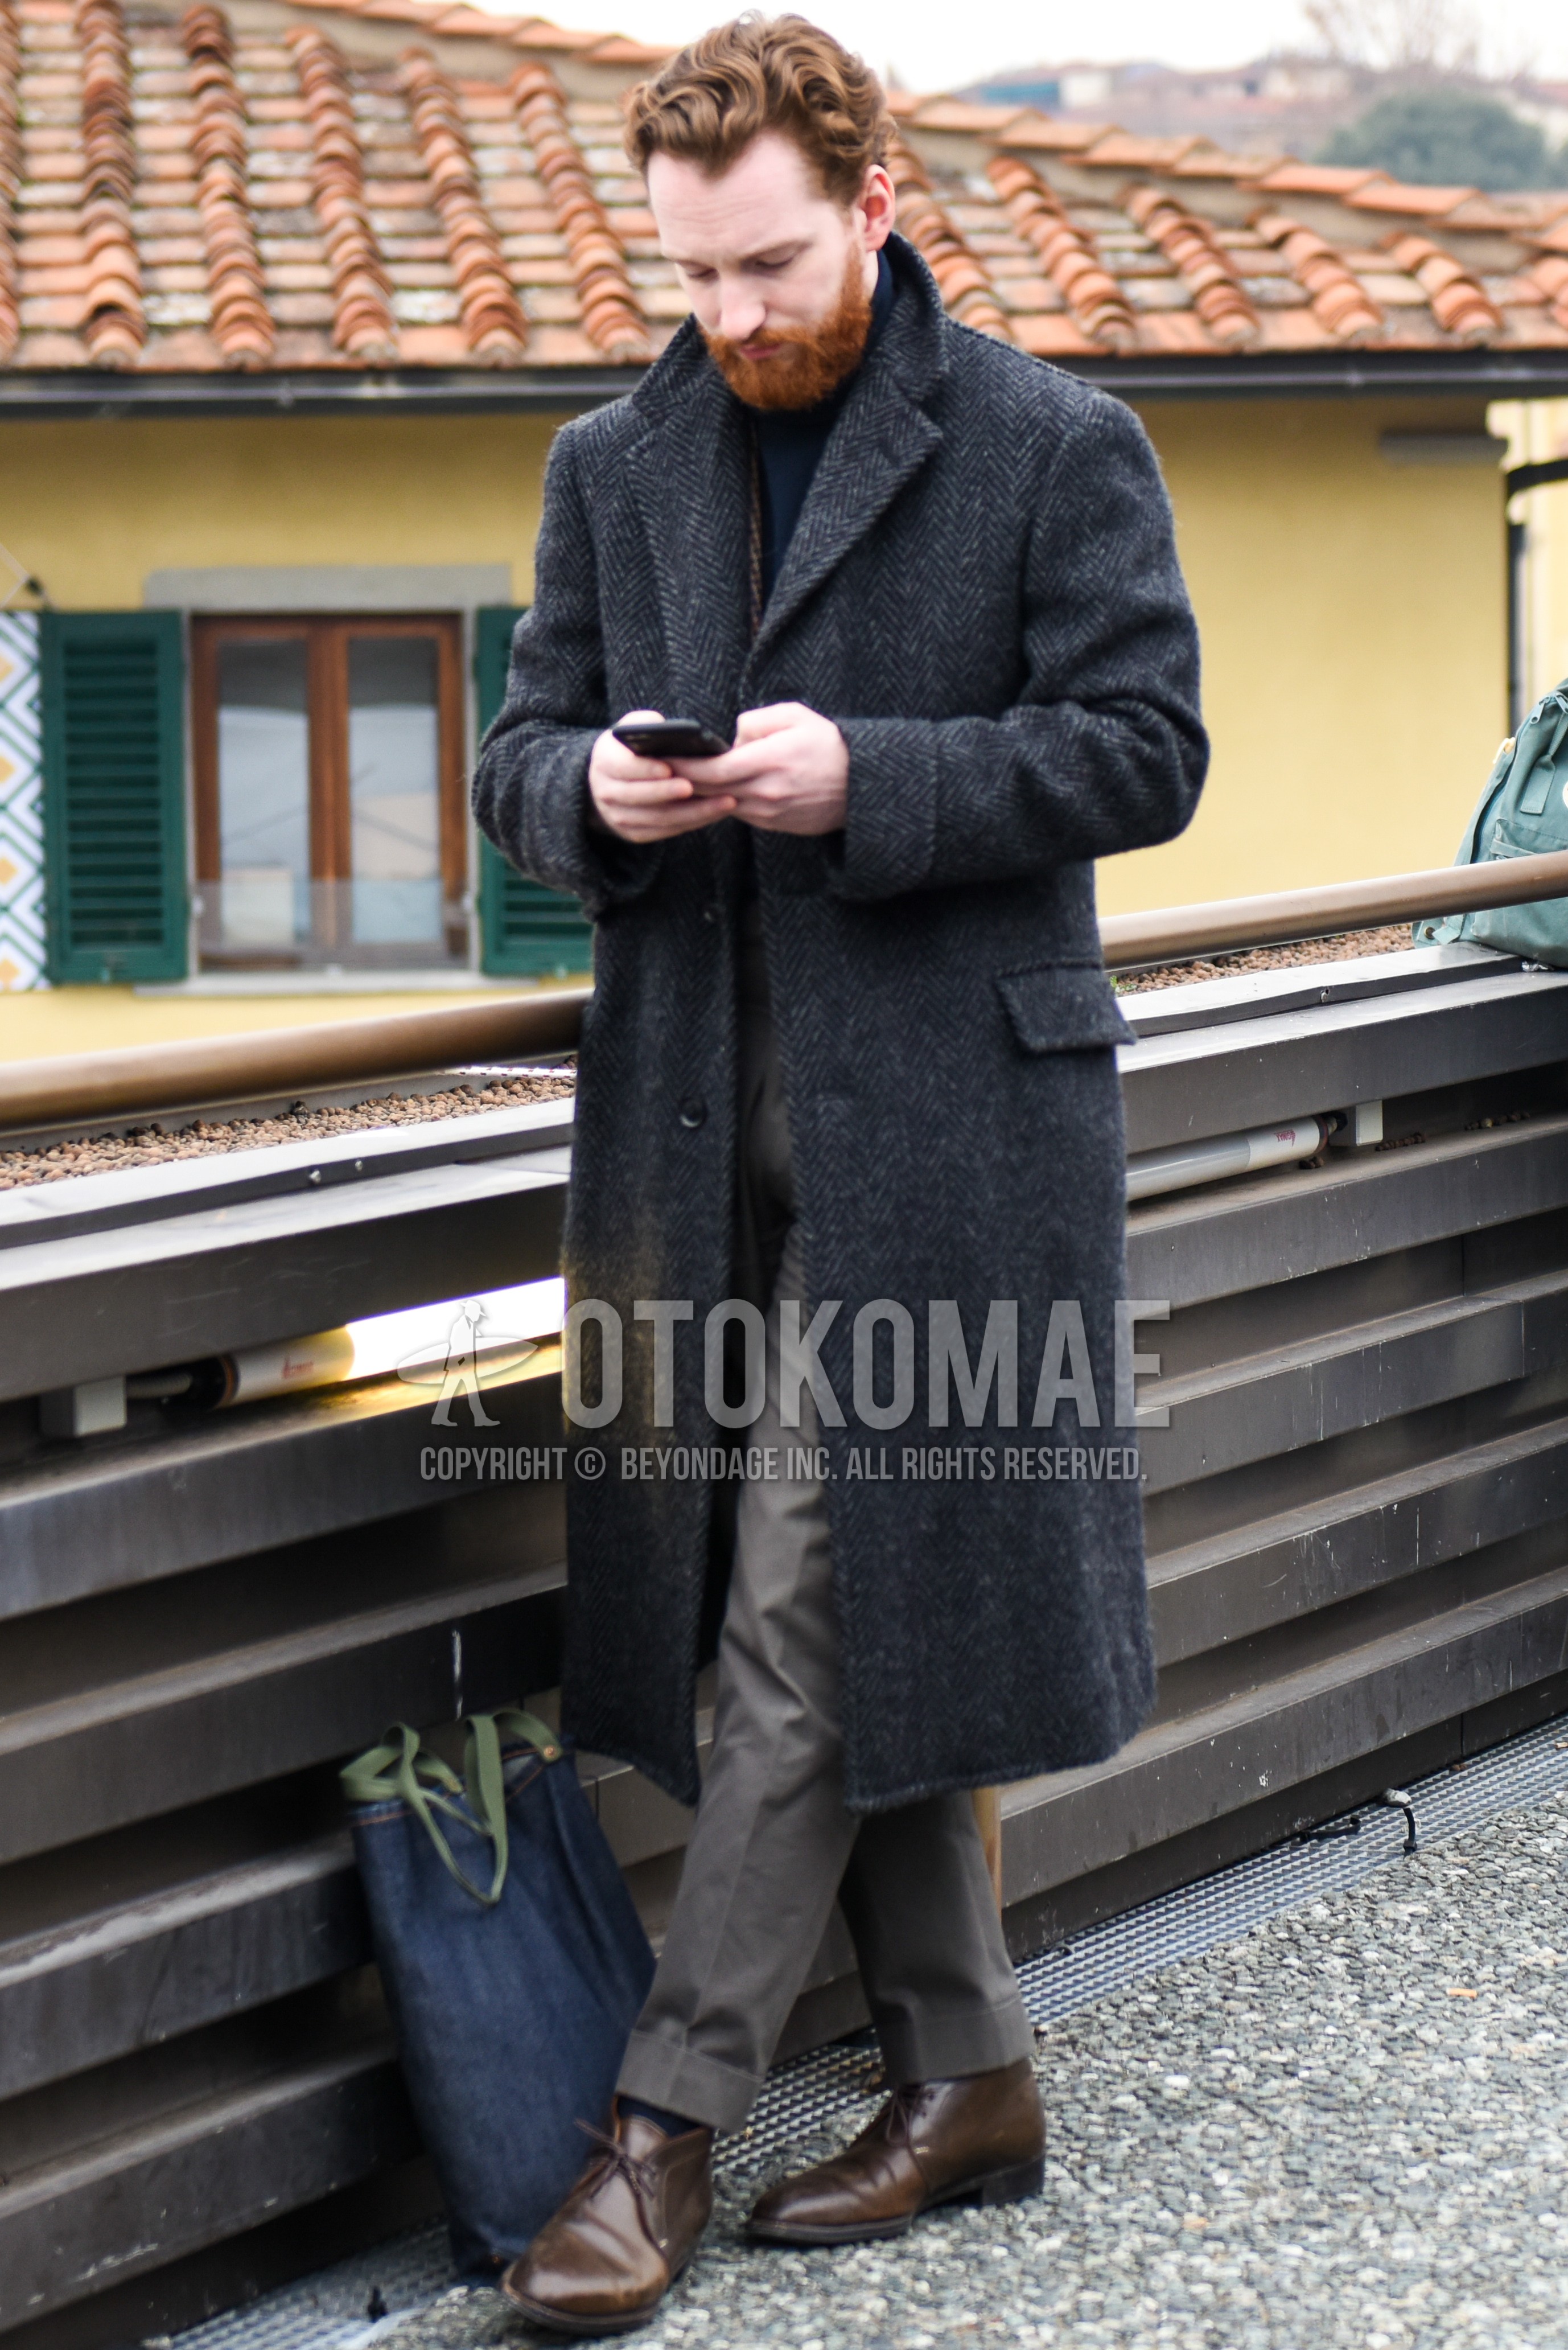 Men's winter outfit with dark gray plain chester coat, gray plain slacks, brown chukka boots, navy plain tote bag.